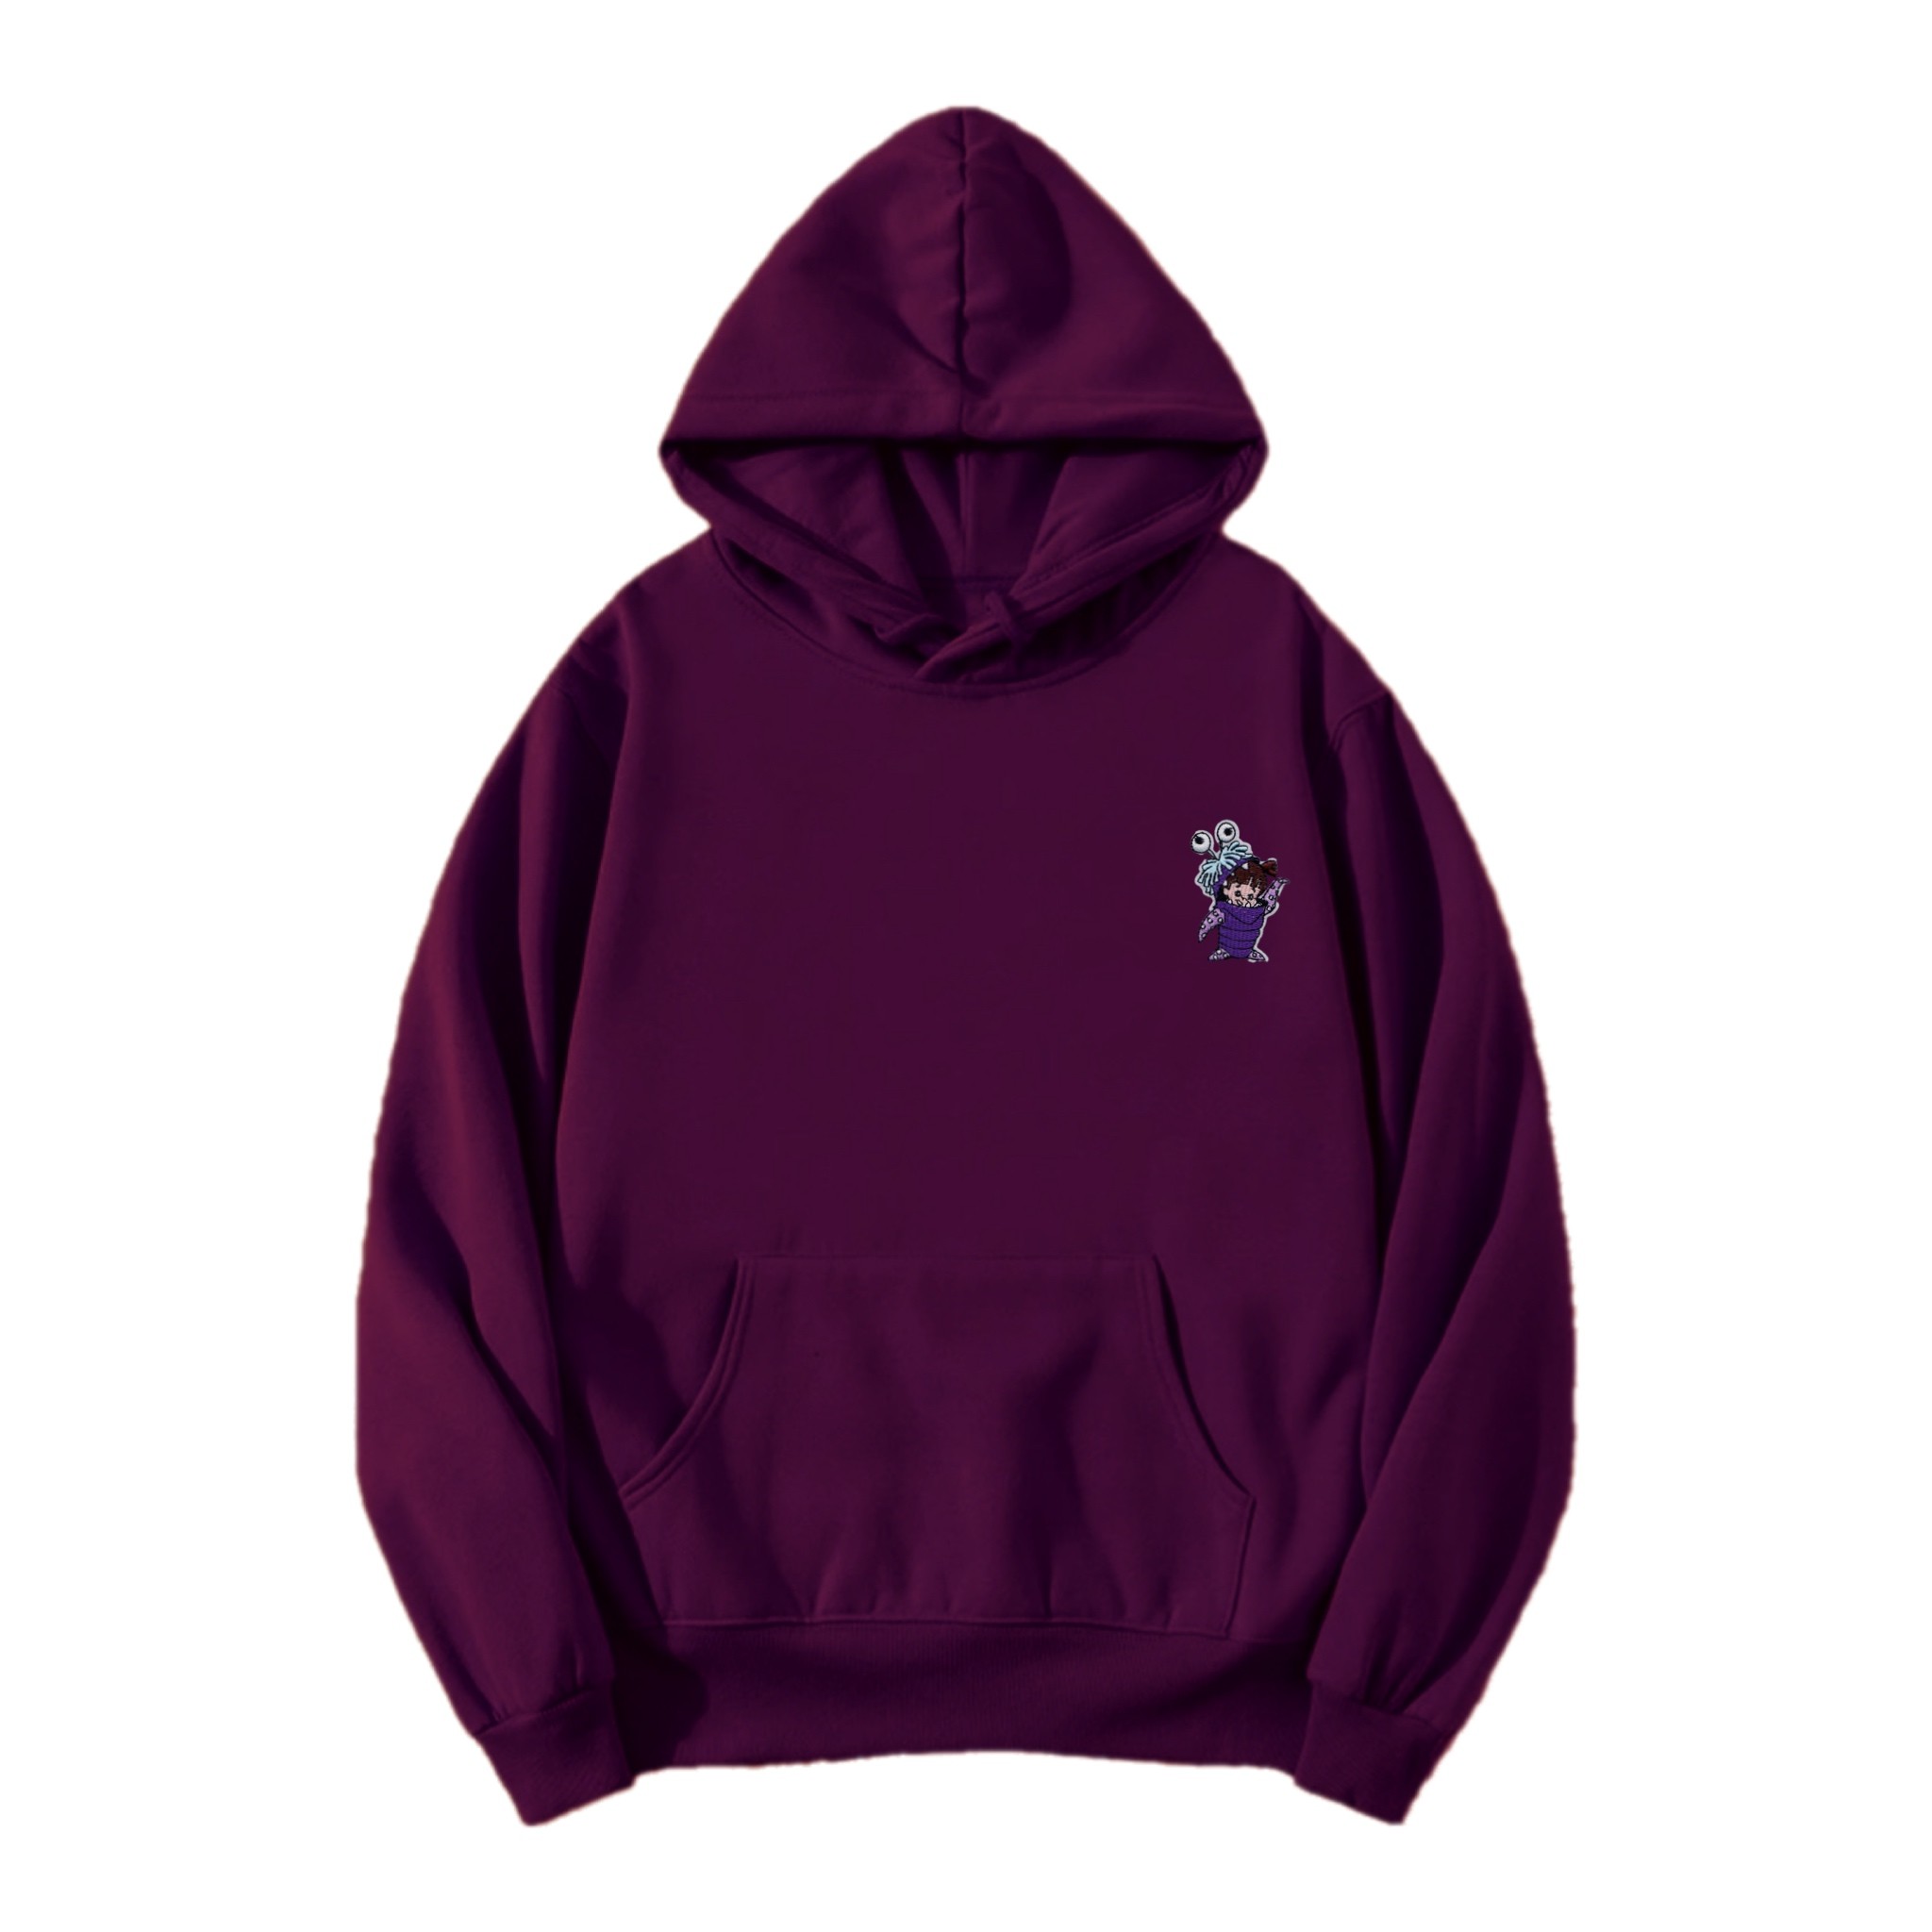 BOO patched regular fit dark purple hoodie 